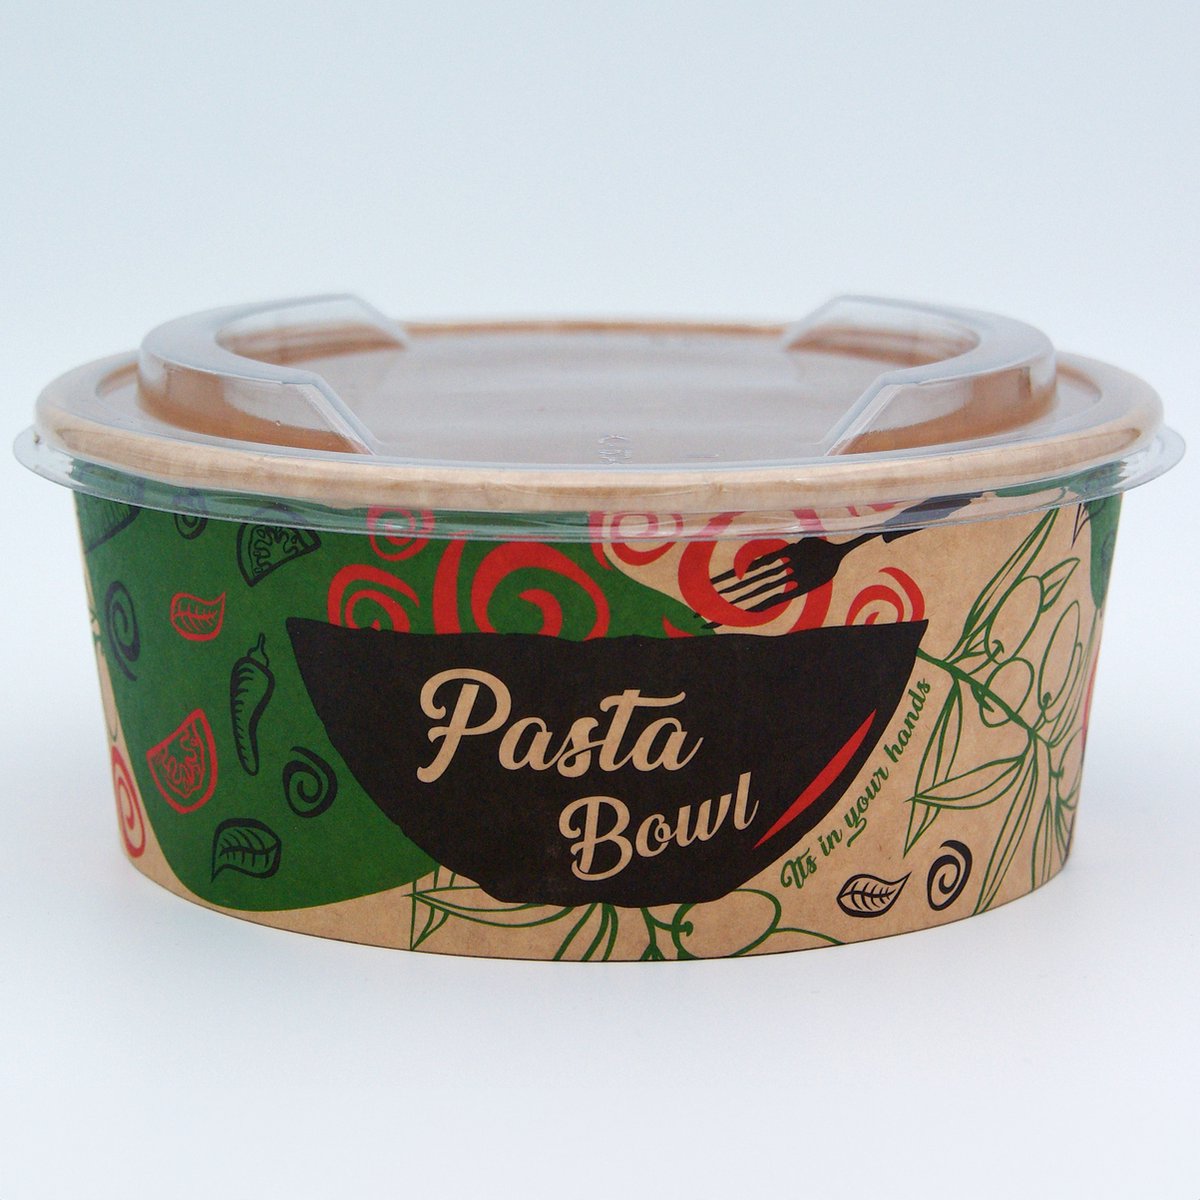 CUPSZ Kraft Pasta Bowl Met Deksel - Maaltijd Bowl - Karton - 750 ml (26 oz.) - Per 300 stuks